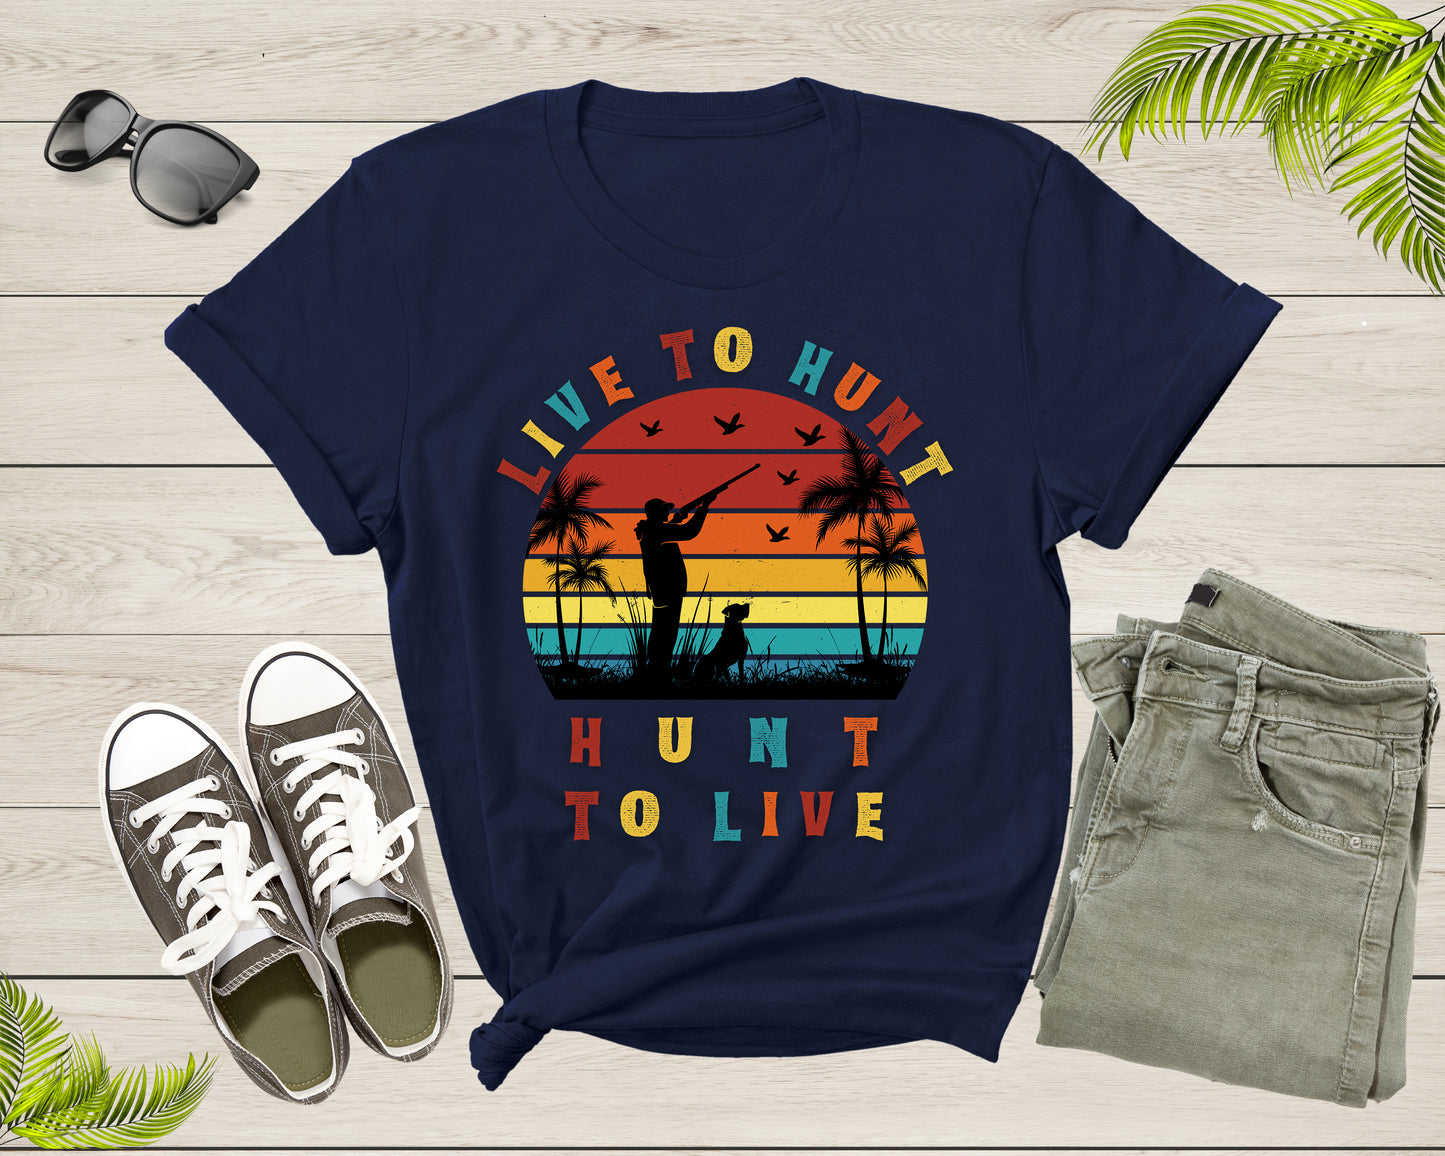 Duck Hunting Shirt Hunter Gift for Duck and Deer Hunter Men Dad T-Shirt Gift for Hunter Hunting Season Hunting Lover Shirt Men Women